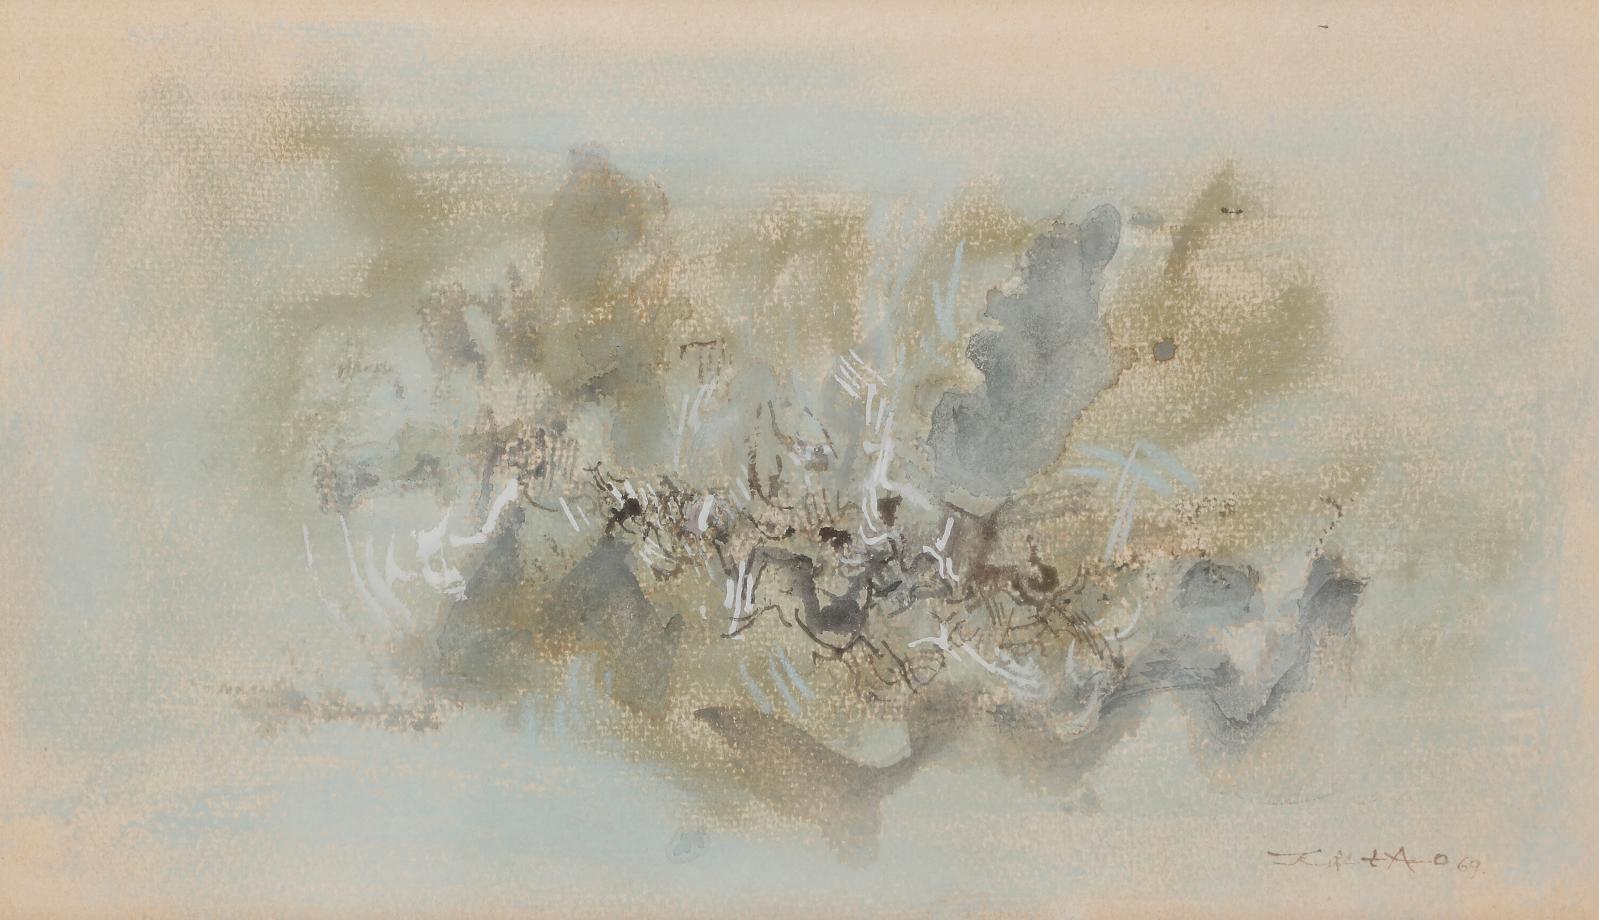 Zao Wou-ki (1920-2013), Composition, 1969, gouache and ink, 18 x 30.5 cm.Estimate: €20,000/30,000